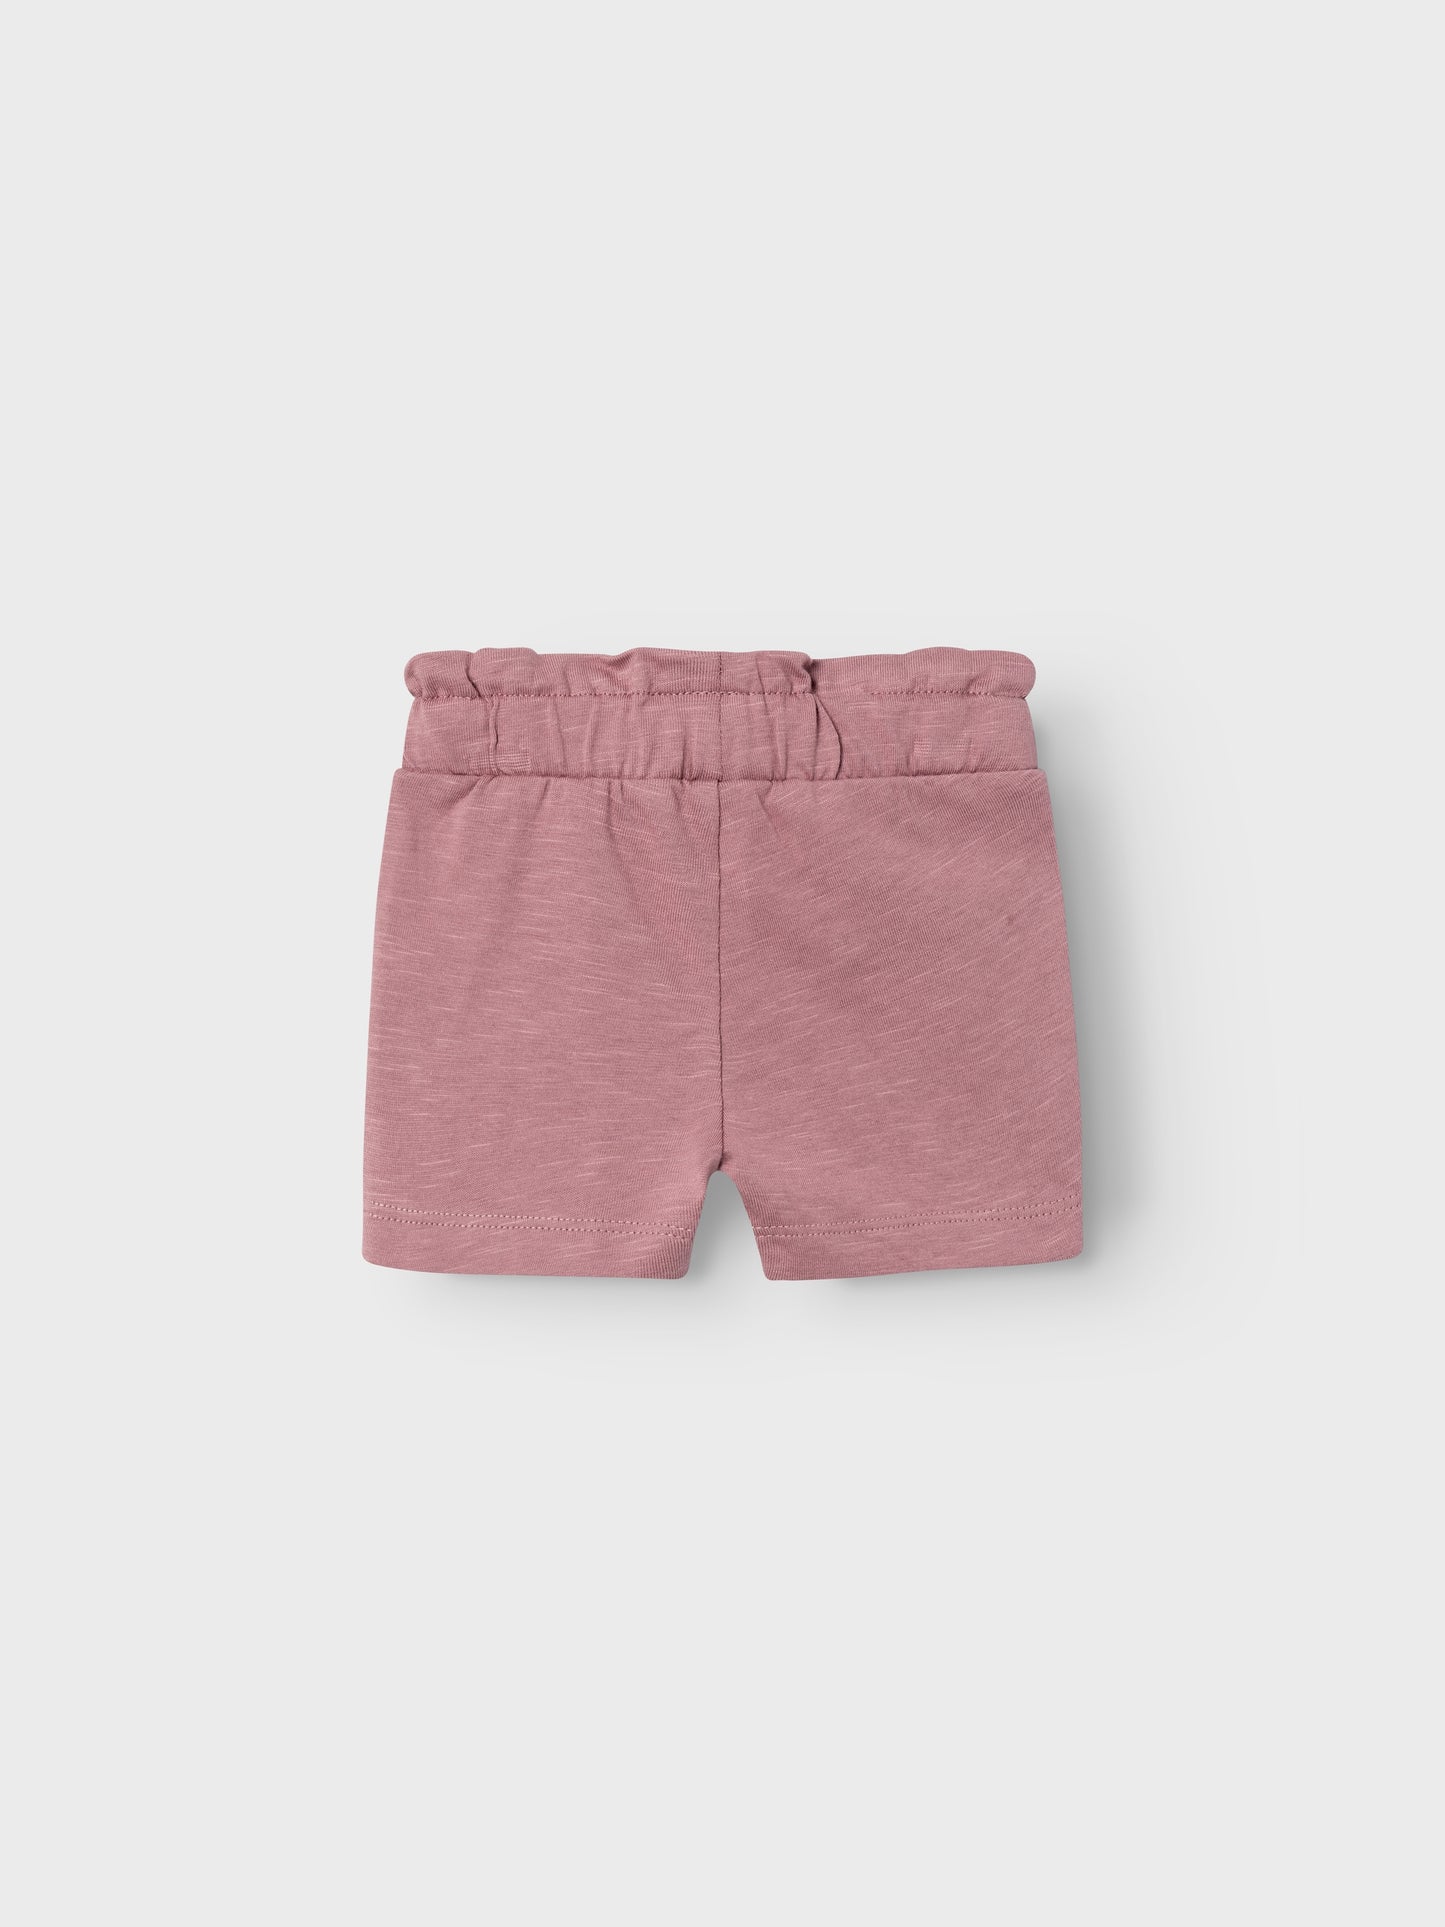 Name it - Hubbi shorts - Nostalgia rose